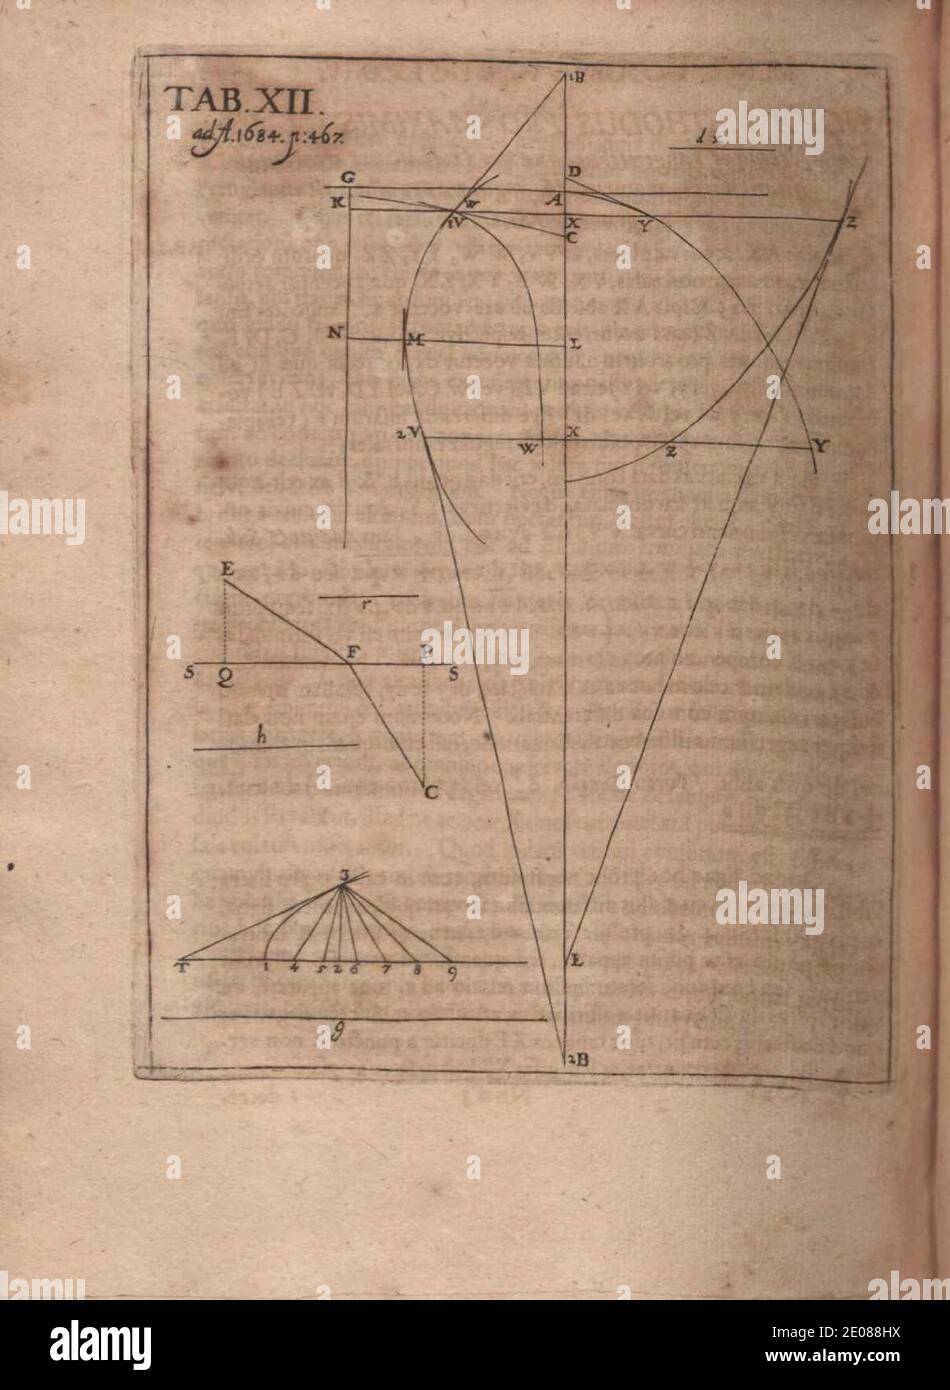 Leibniz, Gottfried Wilhelm von – Nova methodus pro maximis et minimis - Acta Eruditorum - Tabula XII - Graphs, 1684. Stock Photo